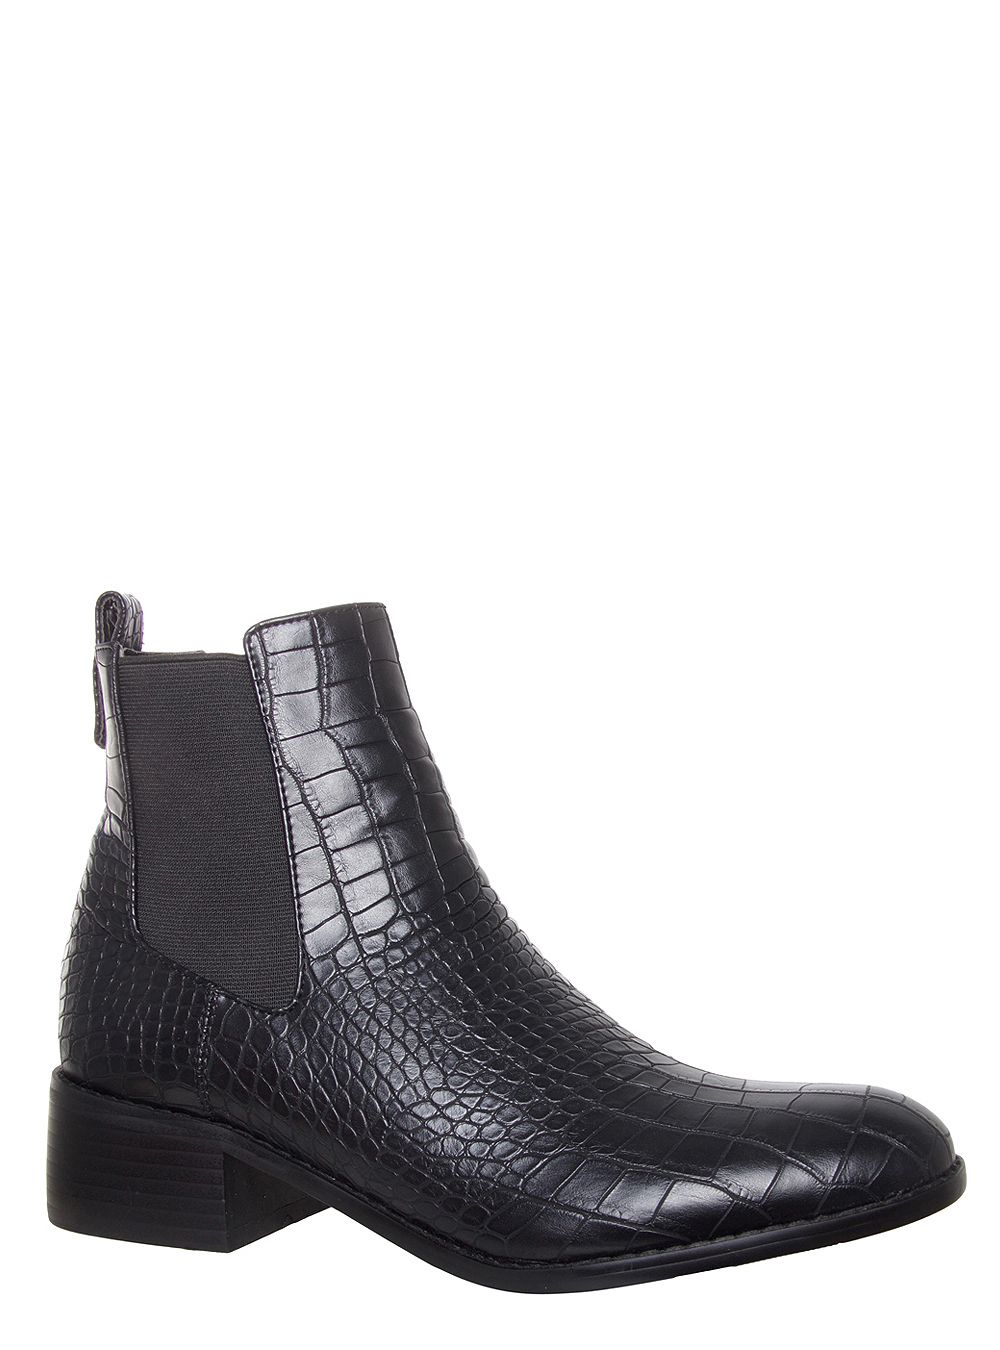 Neve Black Croc Ankle Chelsea Boots